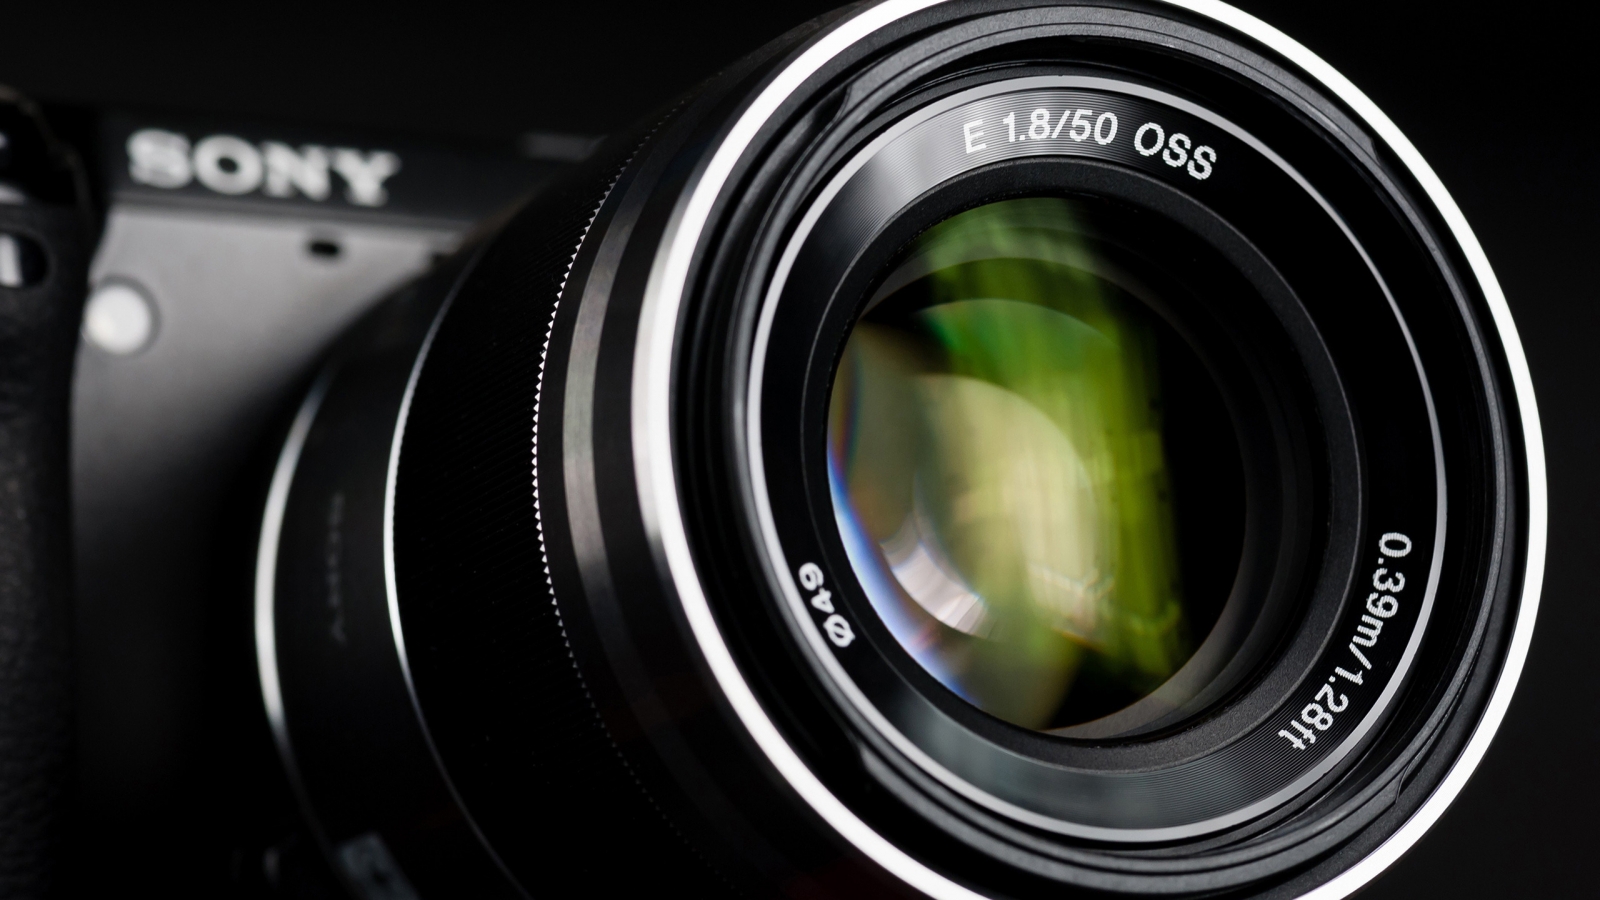 Sony Camera Lens for 1600 x 900 HDTV resolution